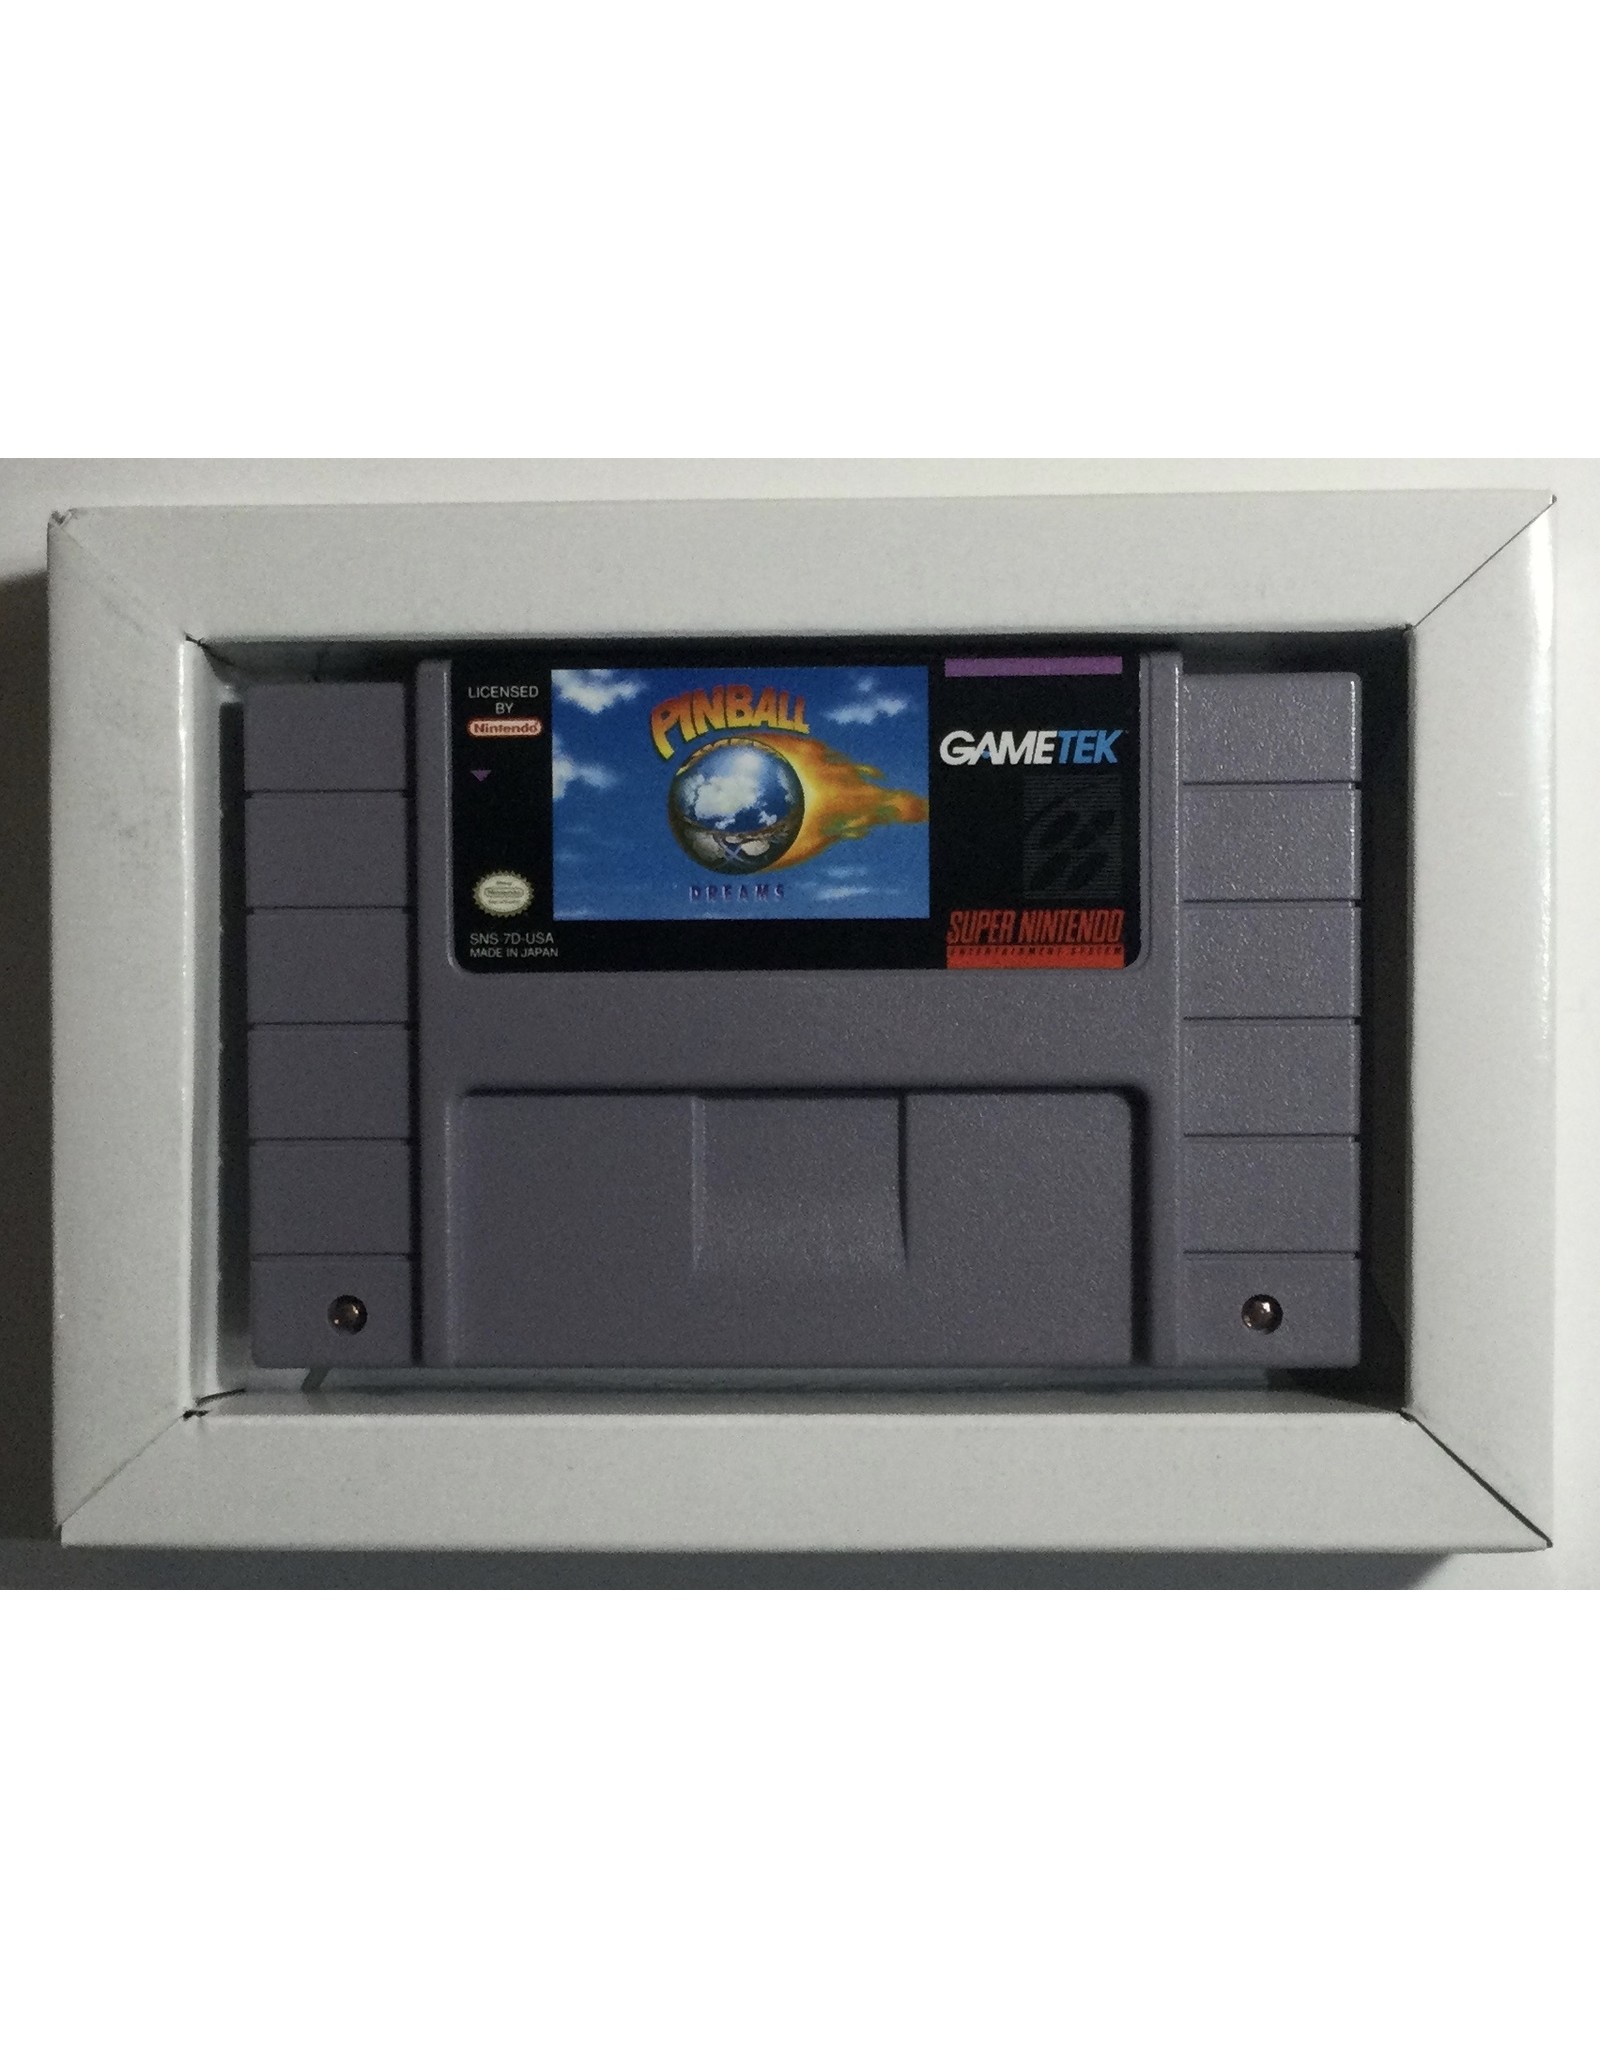 GAMETEK Pinball Dreams for Super Nintendo Entertainment System (SNES) - CIB